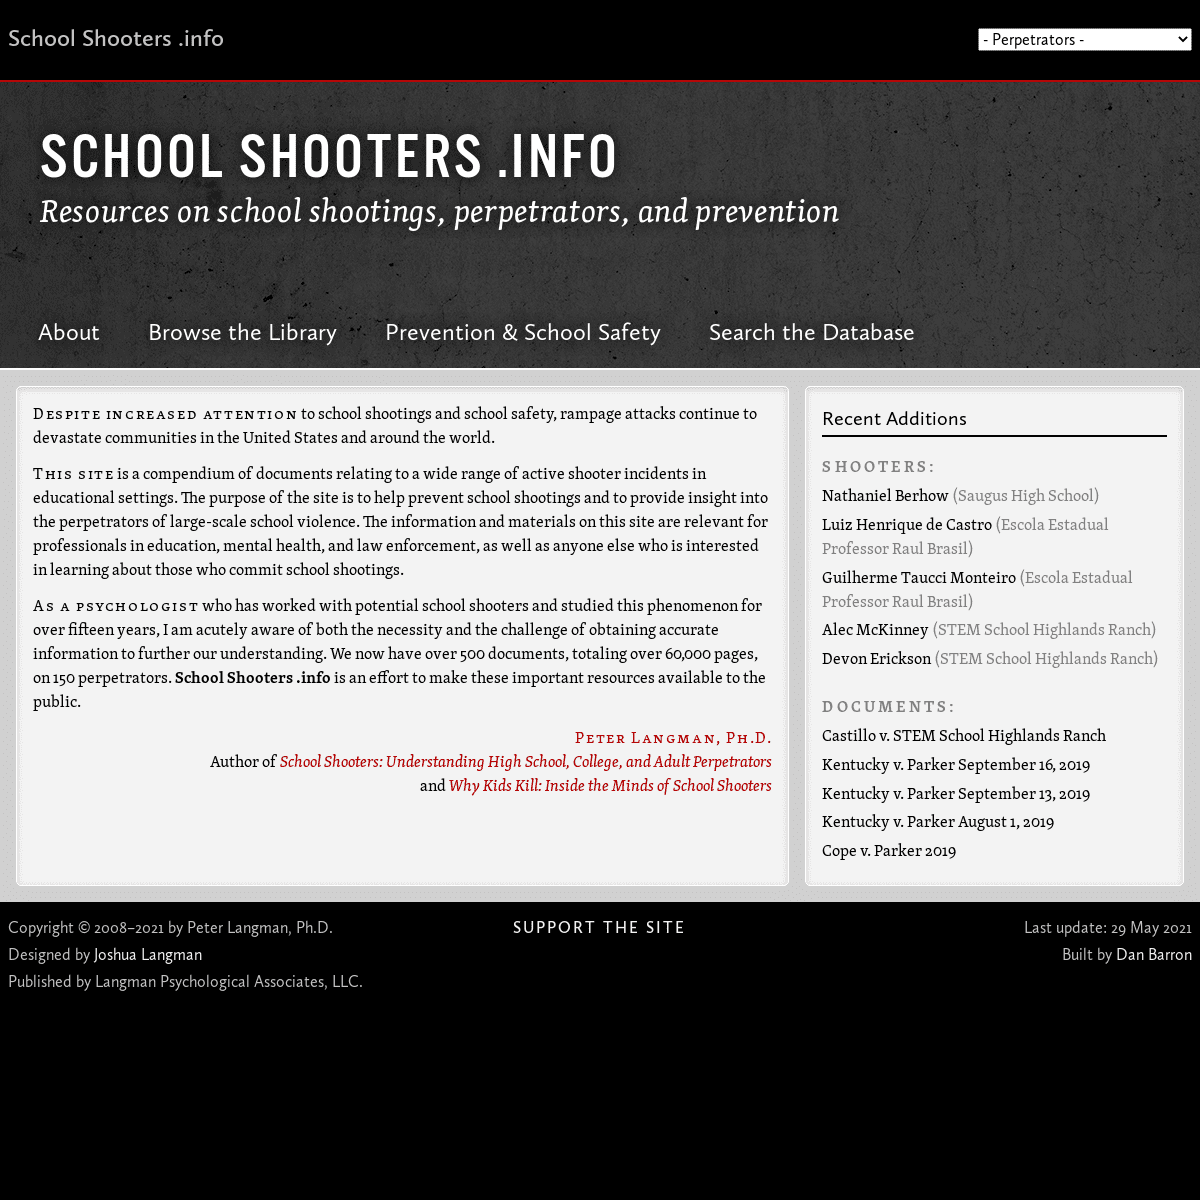 A complete backup of https://schoolshooters.info